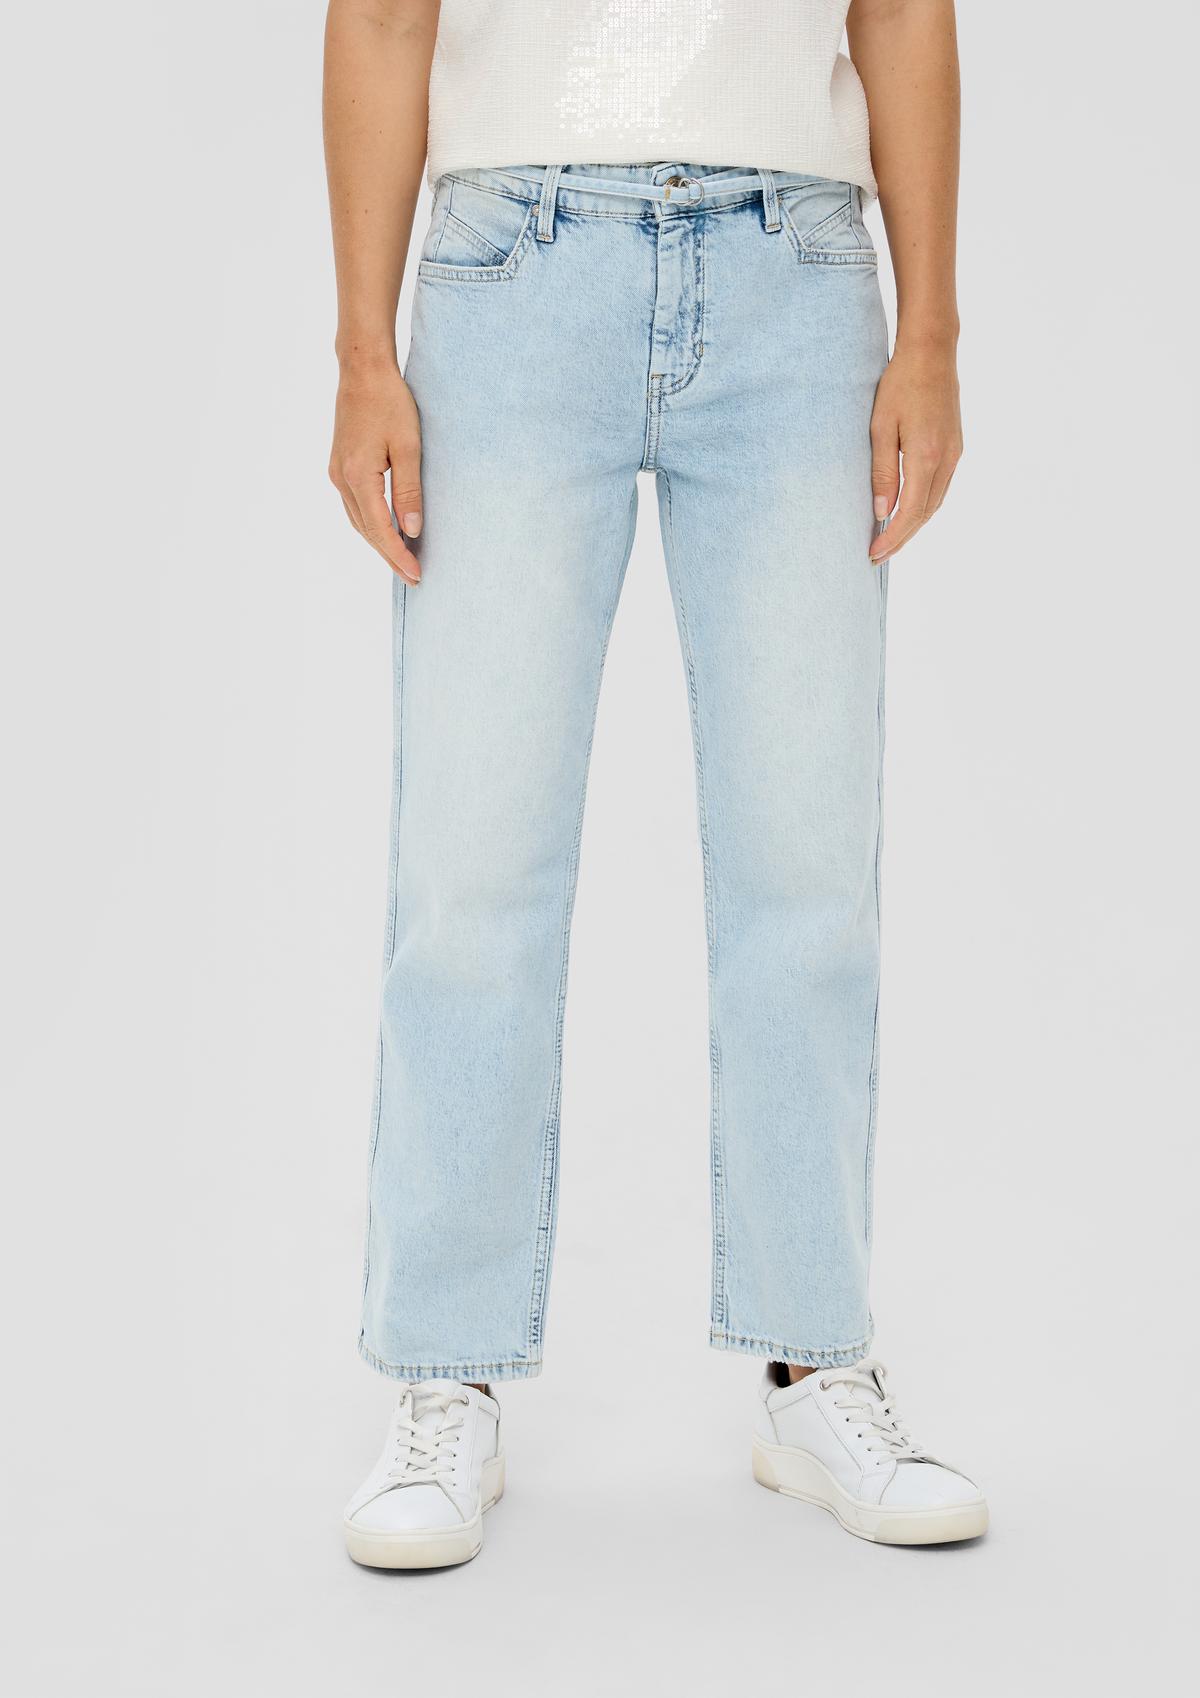 s.Oliver Karolin cropped jeans / regular fit / mid rise / straight leg